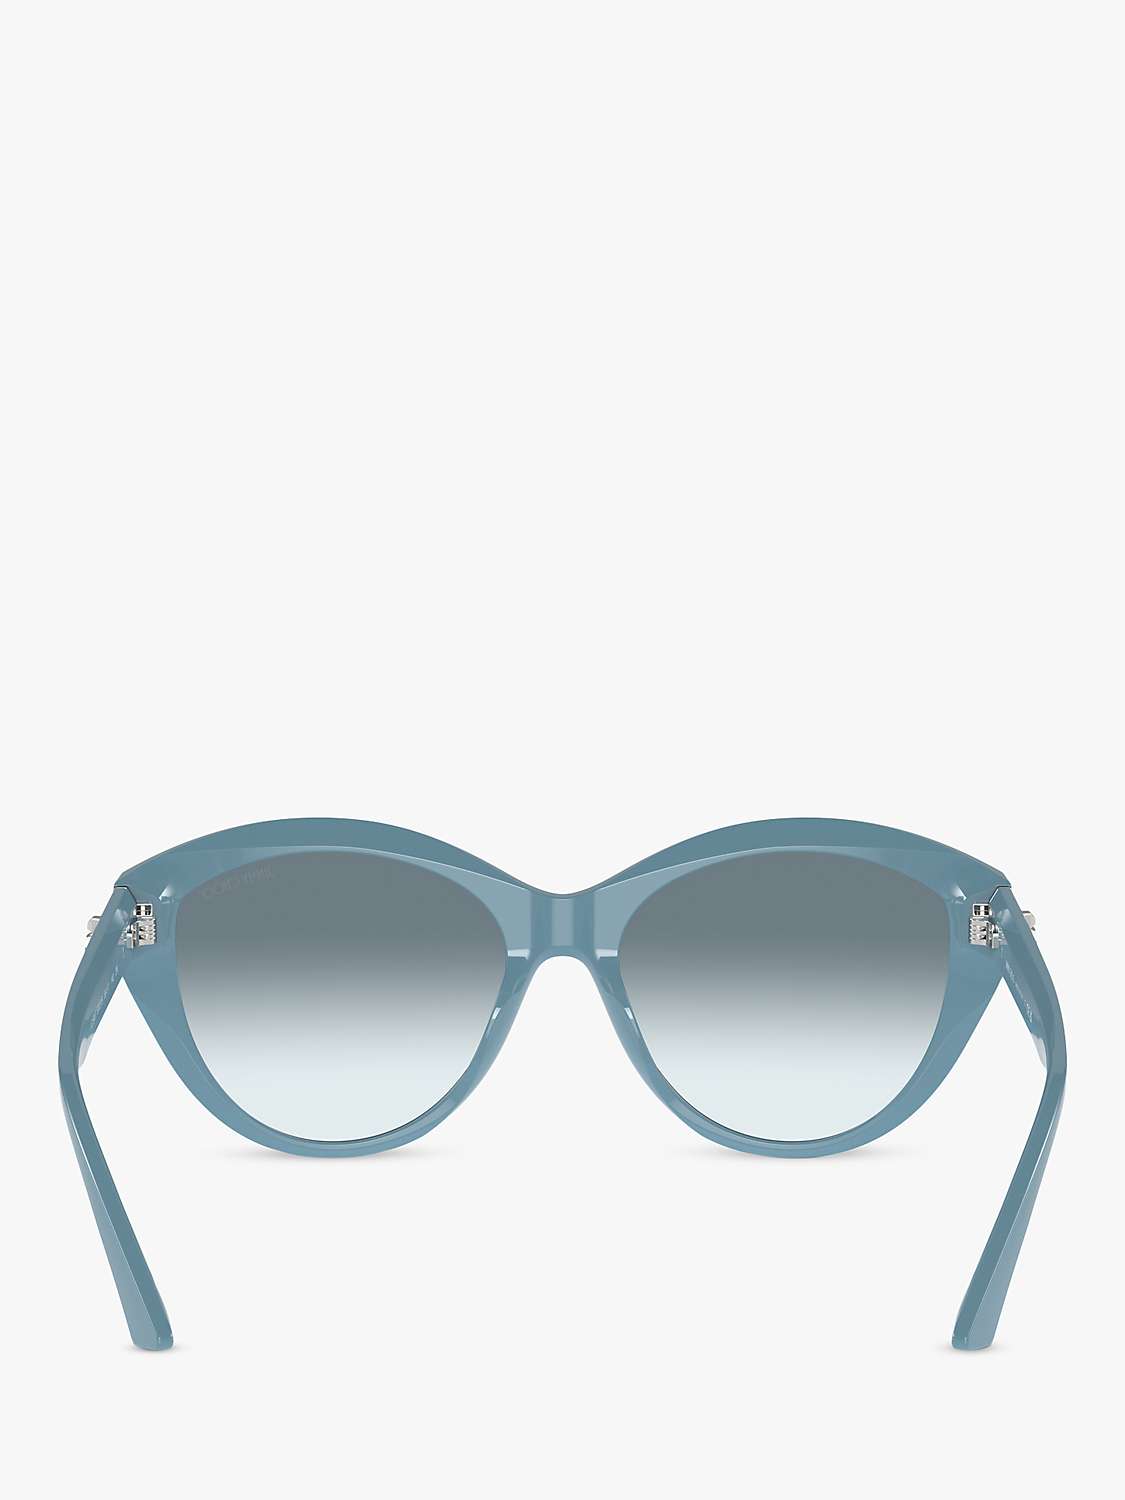 Buy Jimmy Choo JC5007 Women's Cat's Eye Sunglasses, Blue Online at johnlewis.com